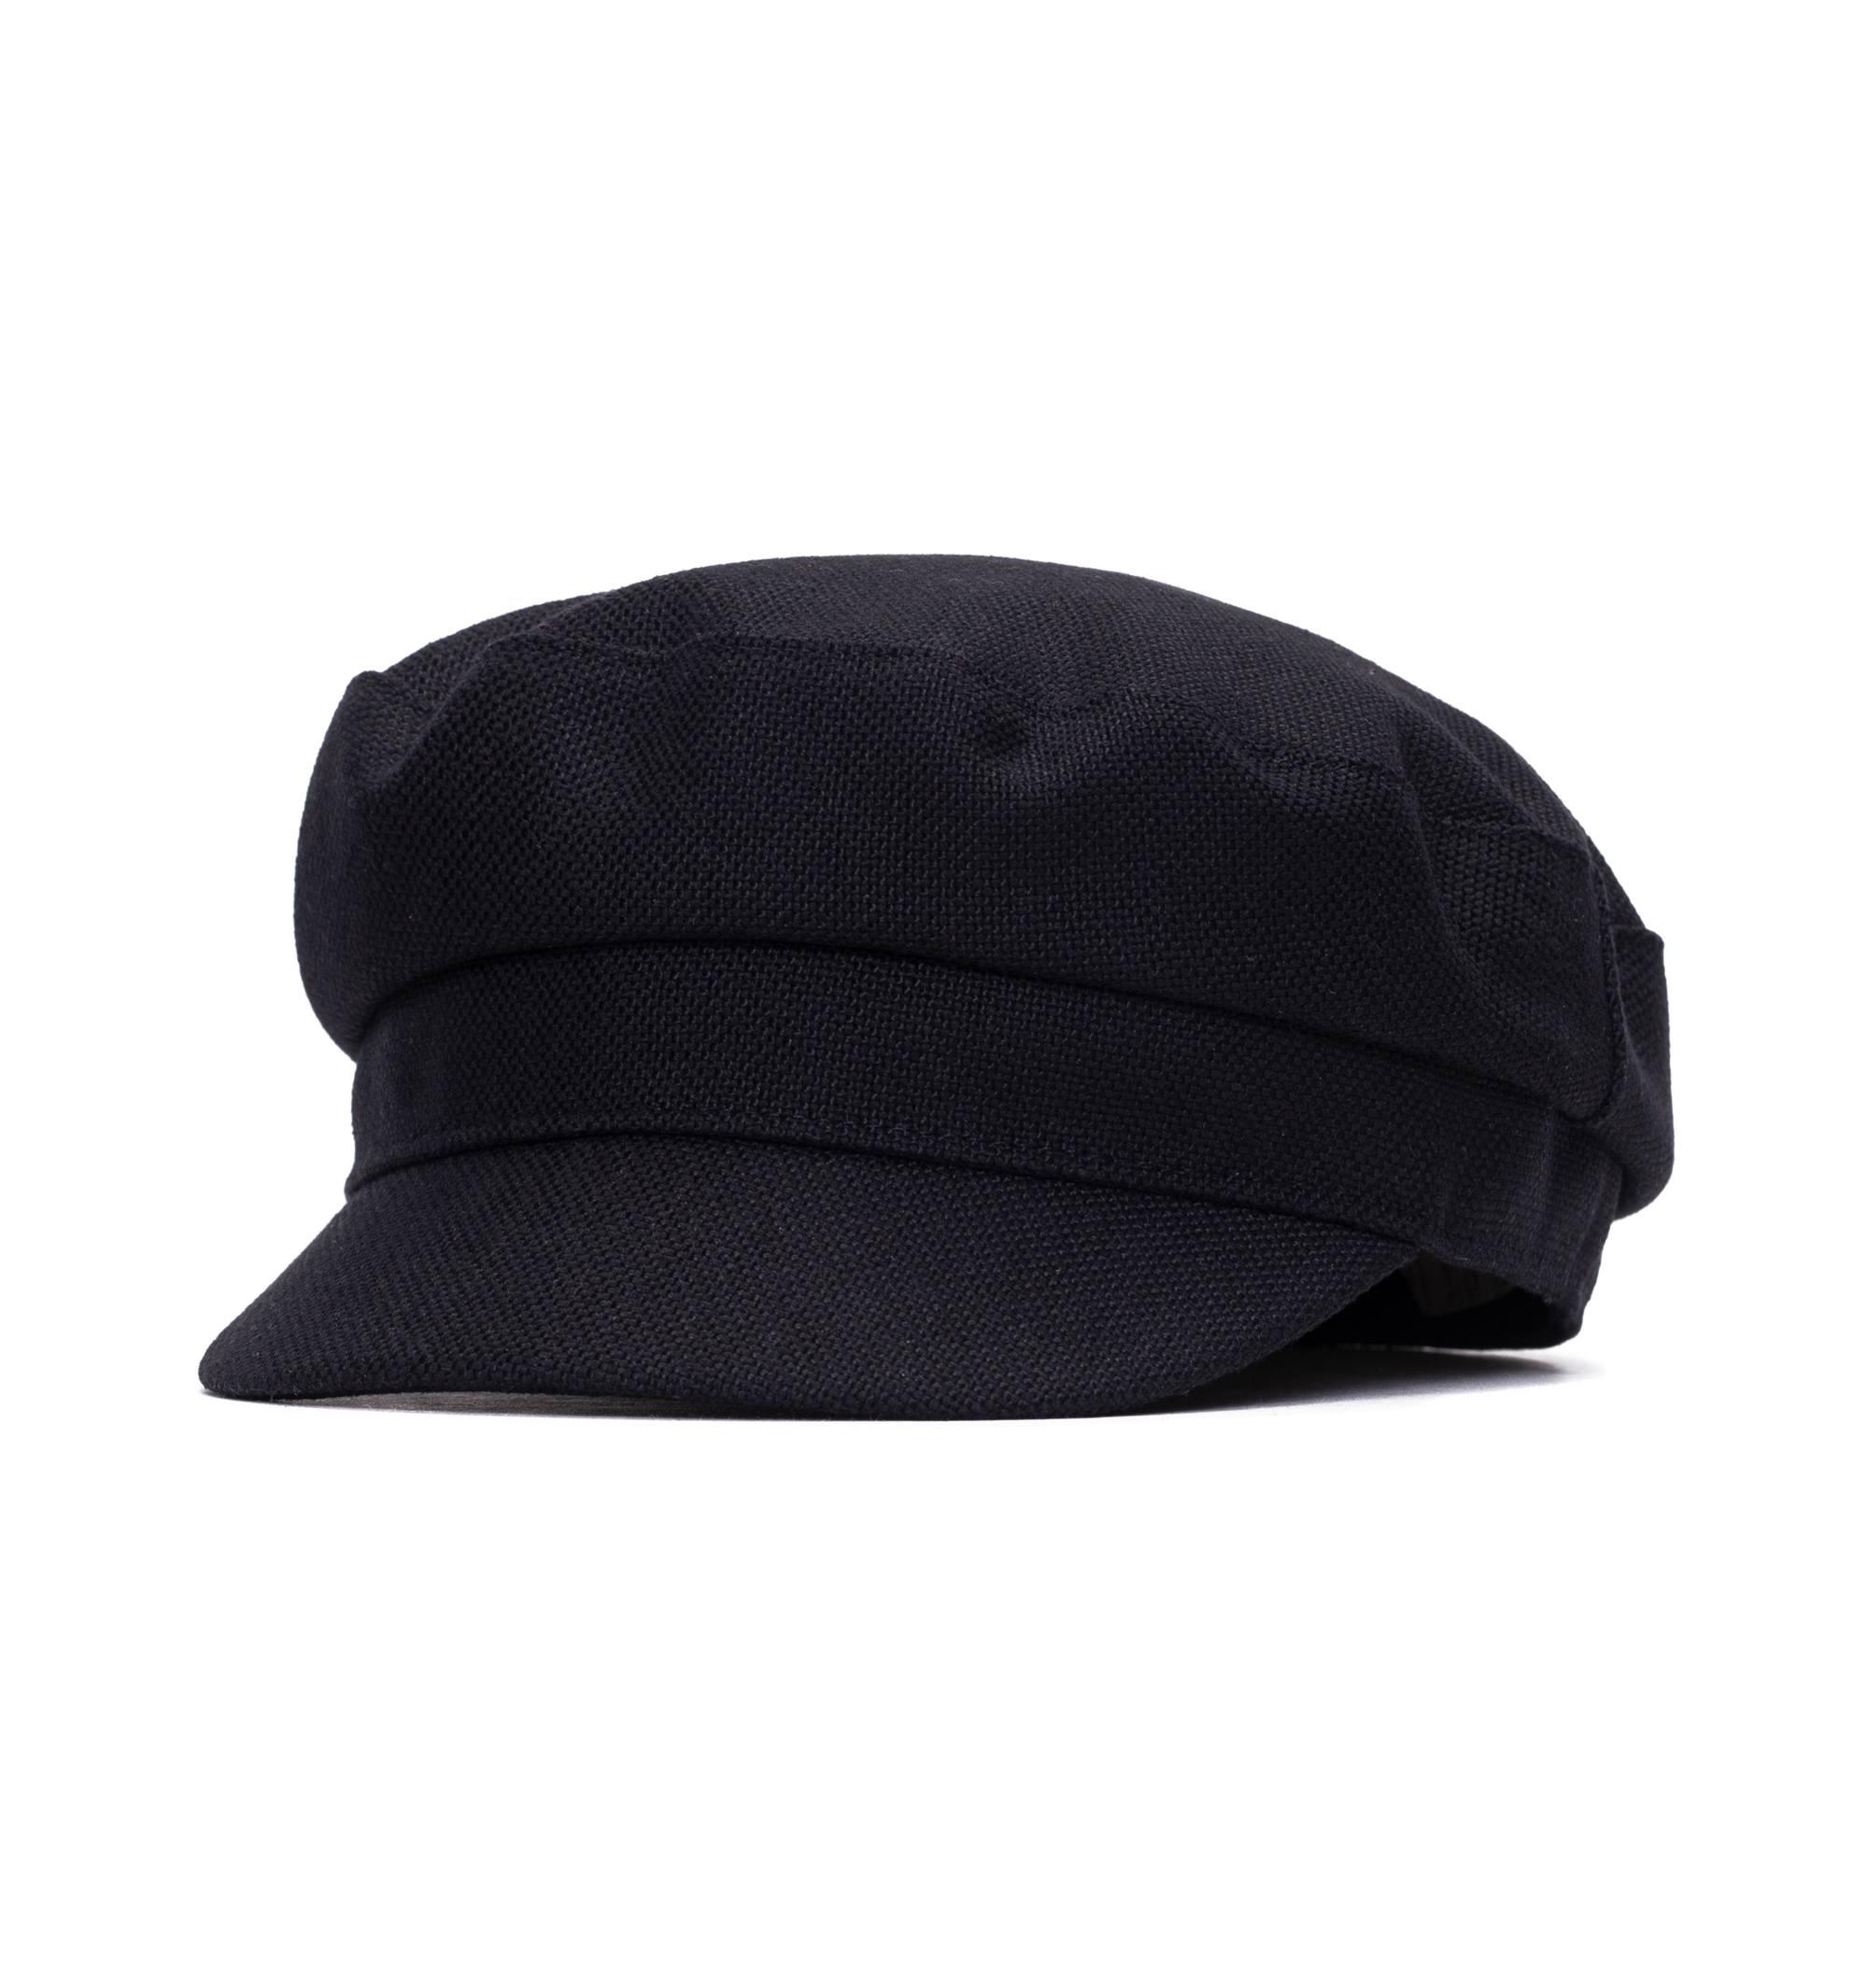 Jair Hat, Black Hot - Costo